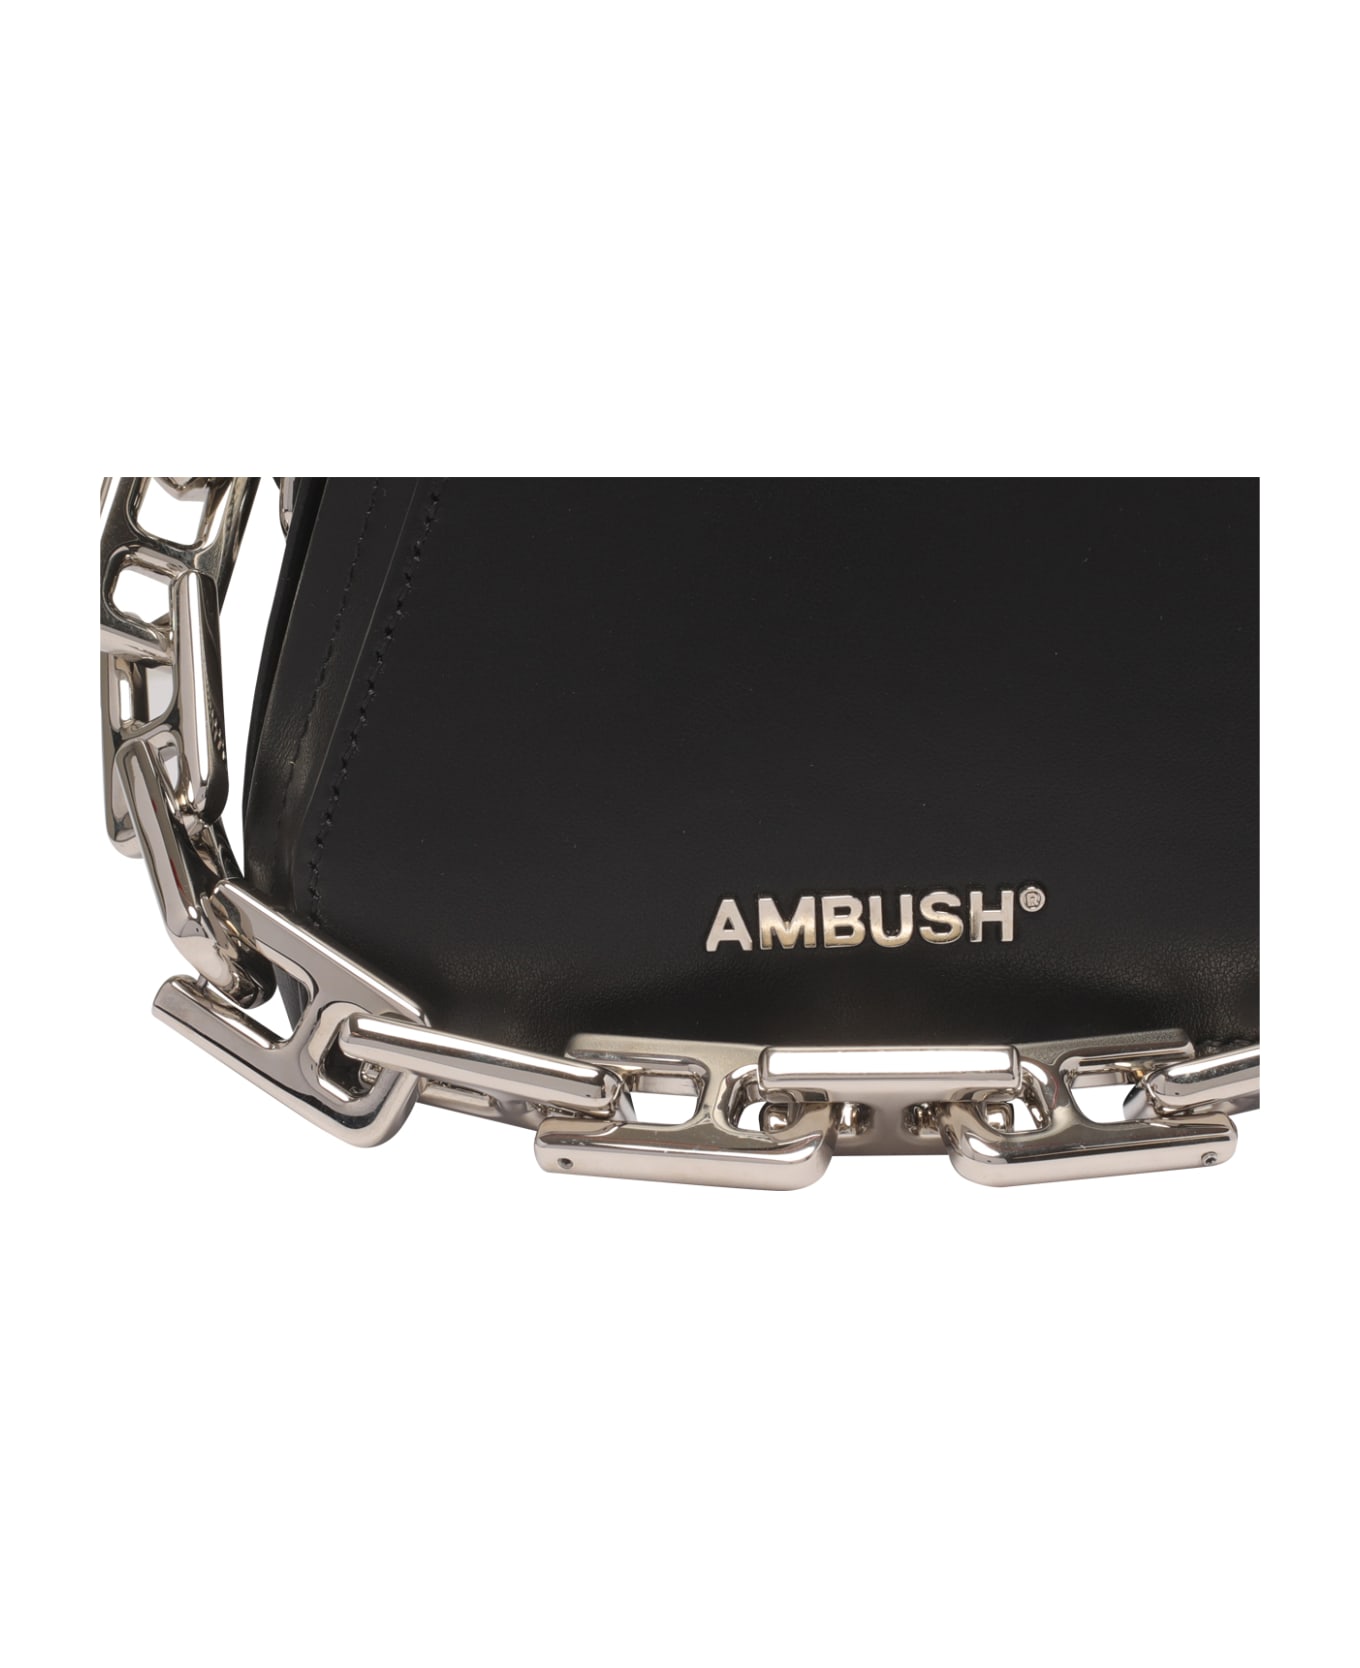 AMBUSH Tri Small Hand Bag - Black Silver トートバッグ